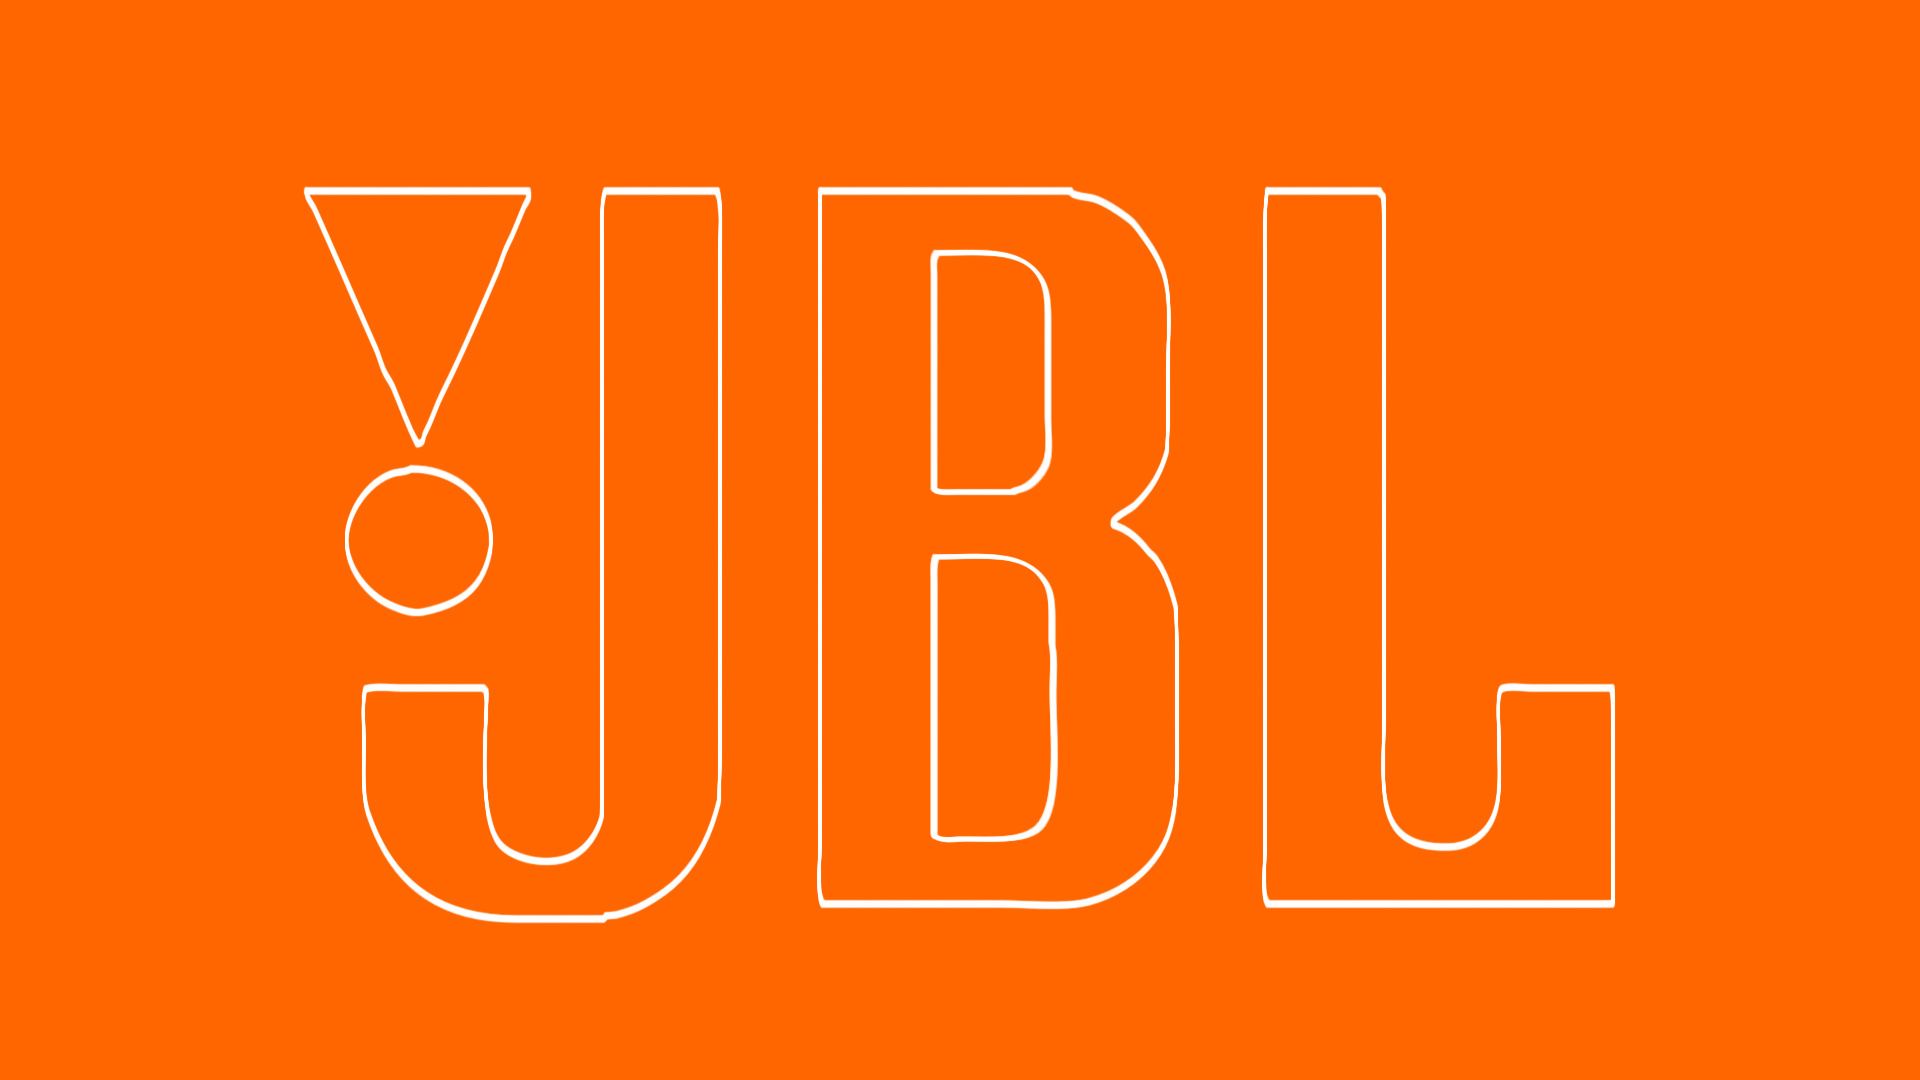 JBL cartoon logo, HD wallpaper, Background image, Graphic design, 1920x1080 Full HD Desktop